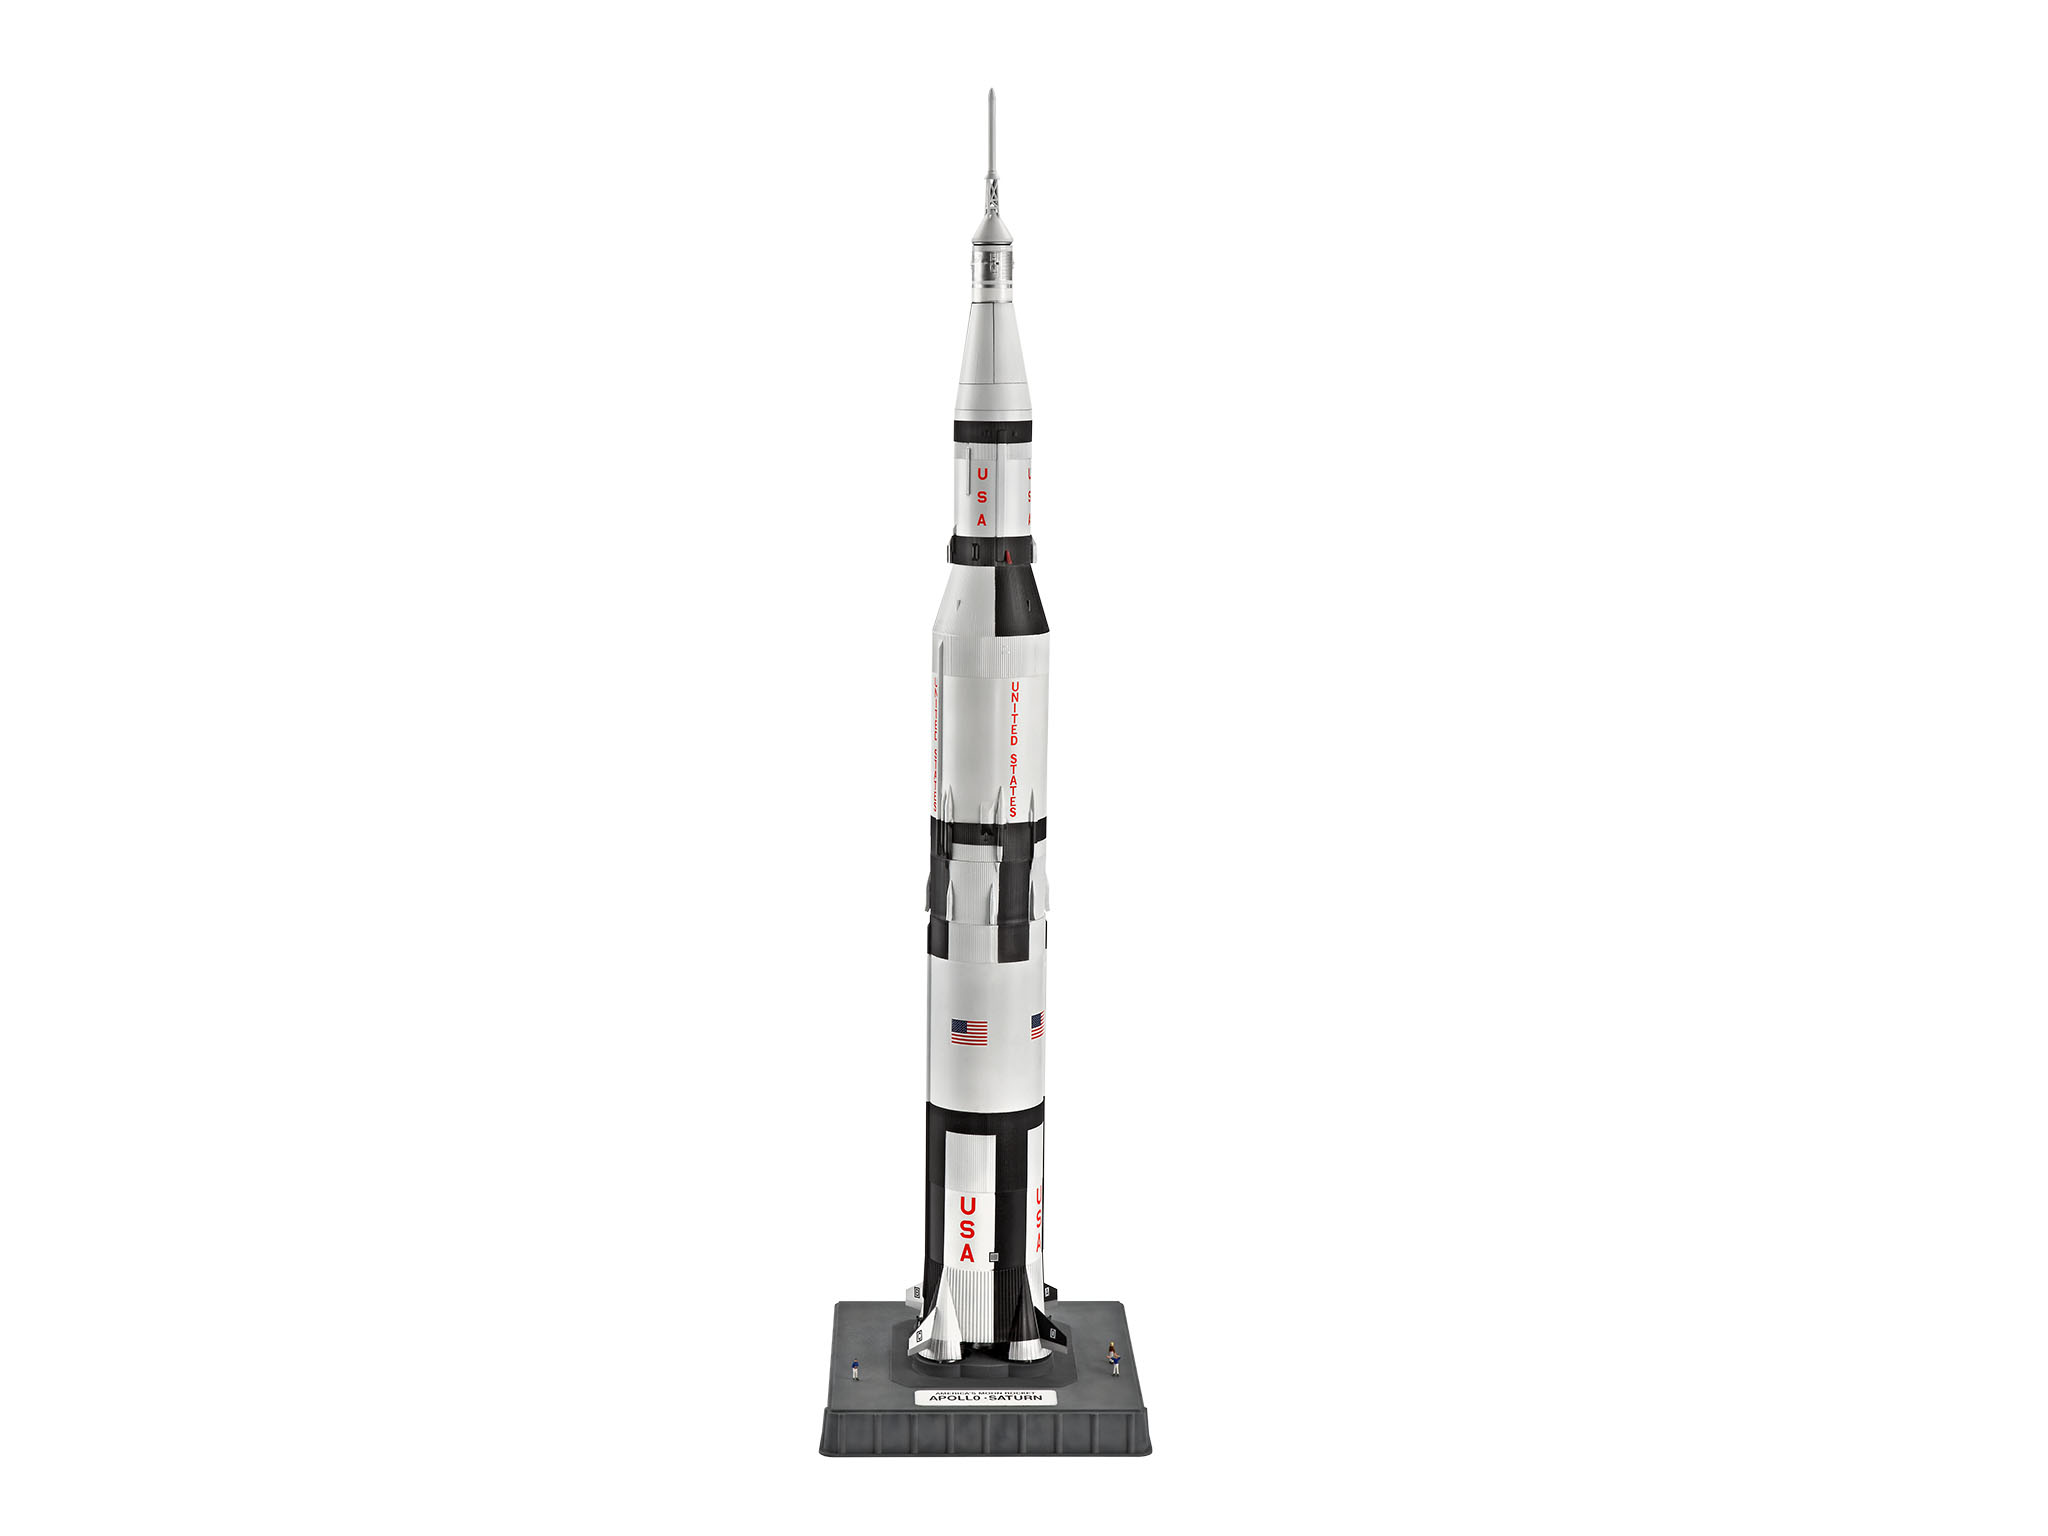 Revell Modellbau 04909 - Apollo Saturn V im Maßstab 1:144